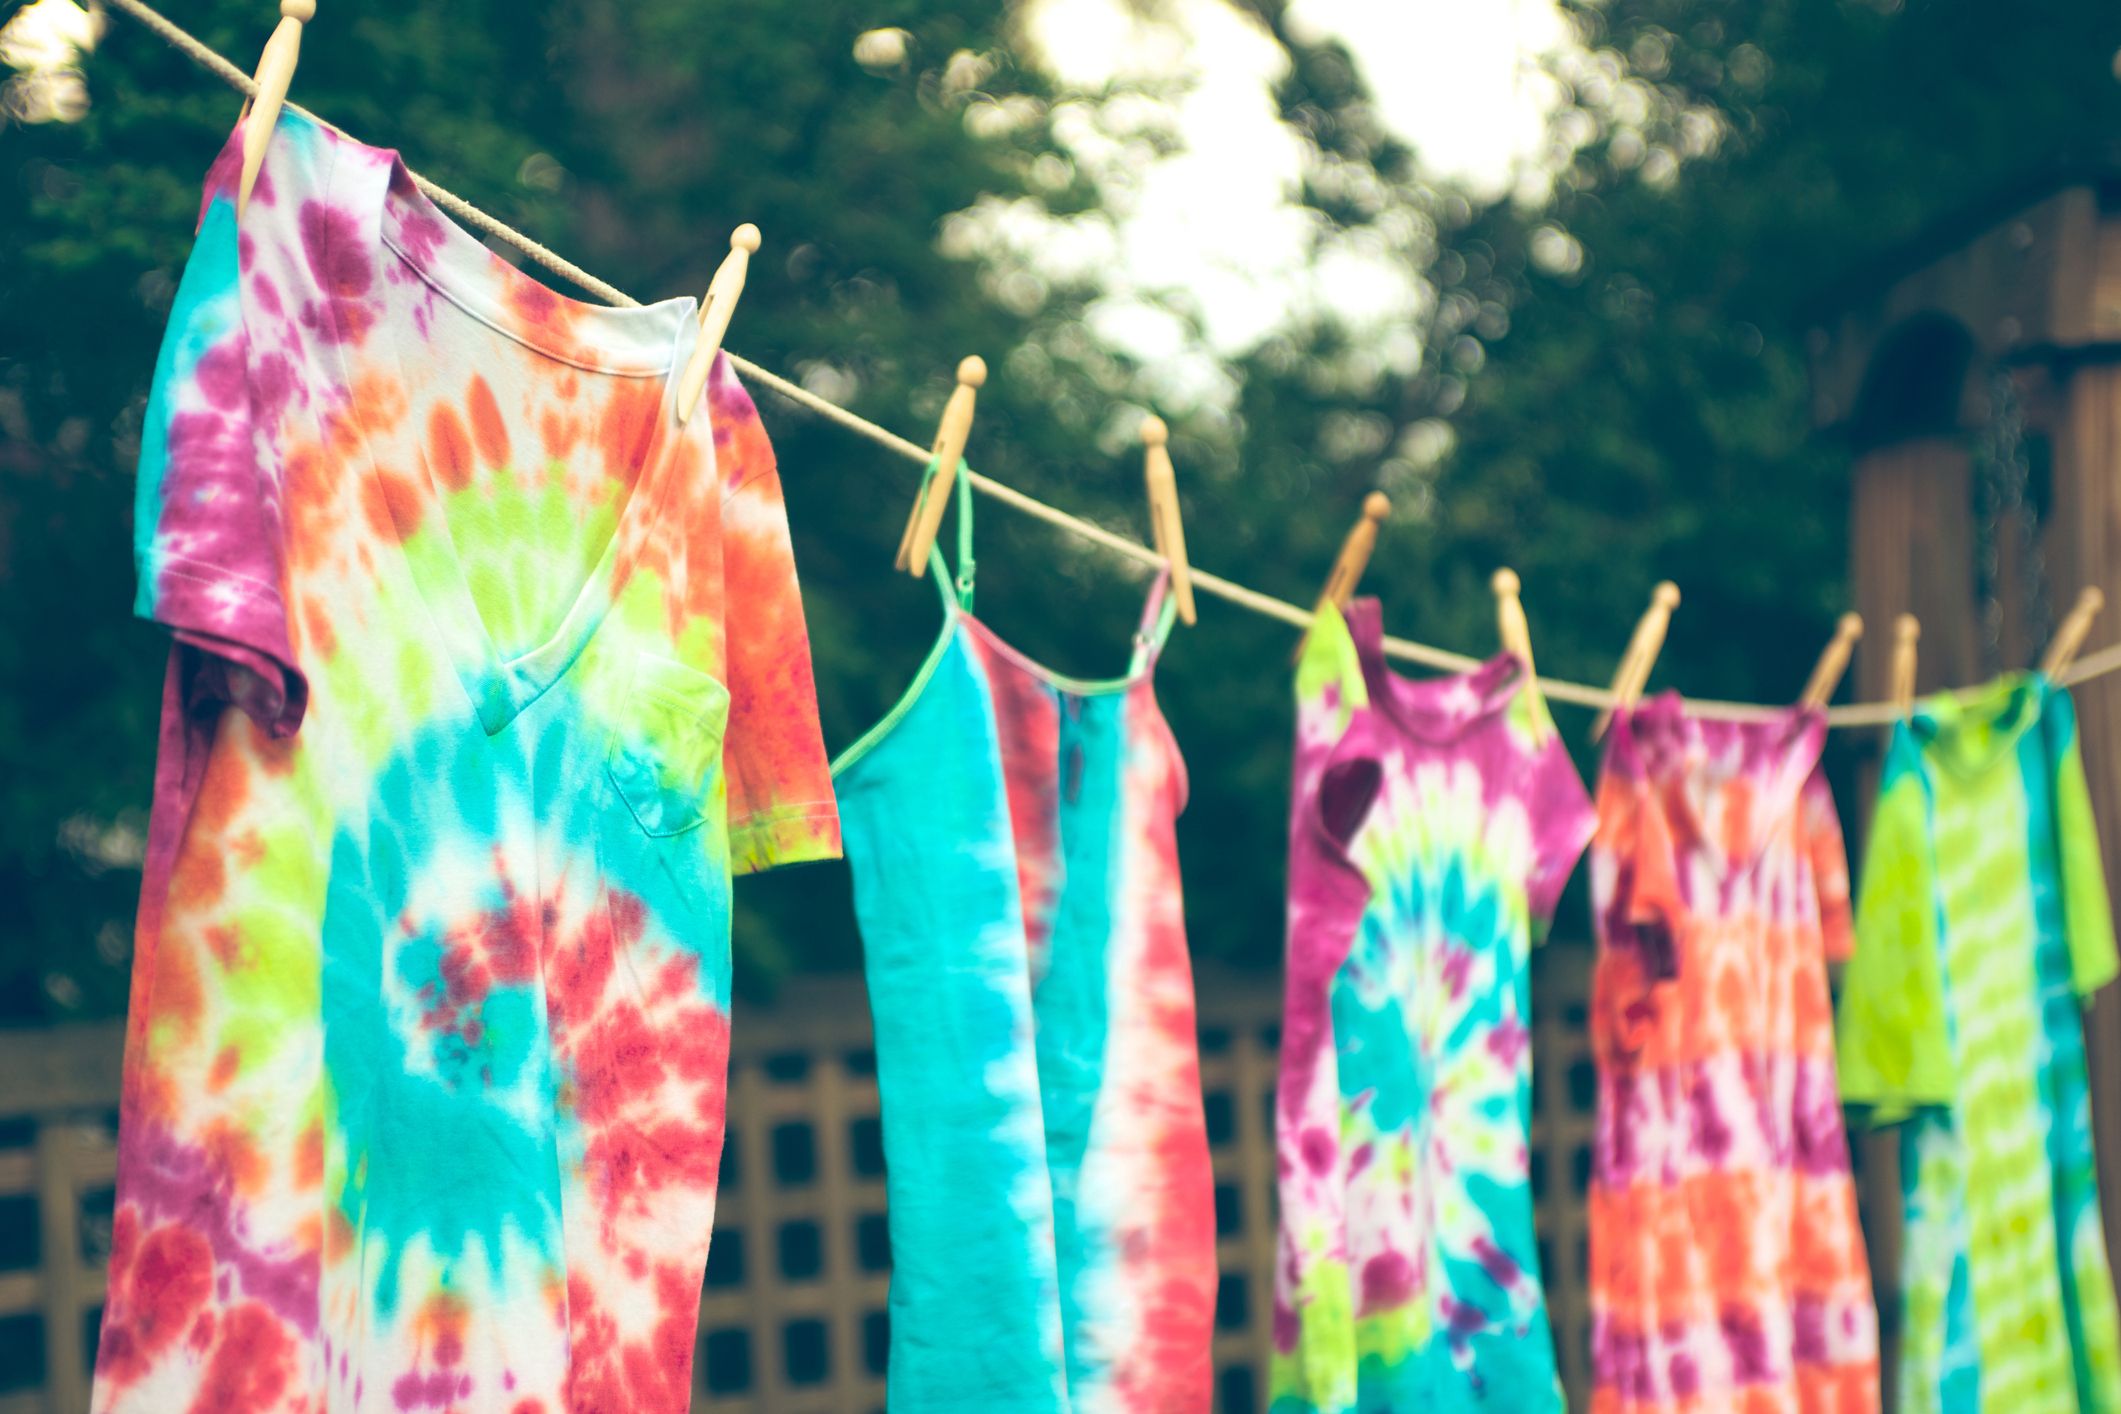 Tie Dye Patterns Great for Kids - Dream a Little Bigger